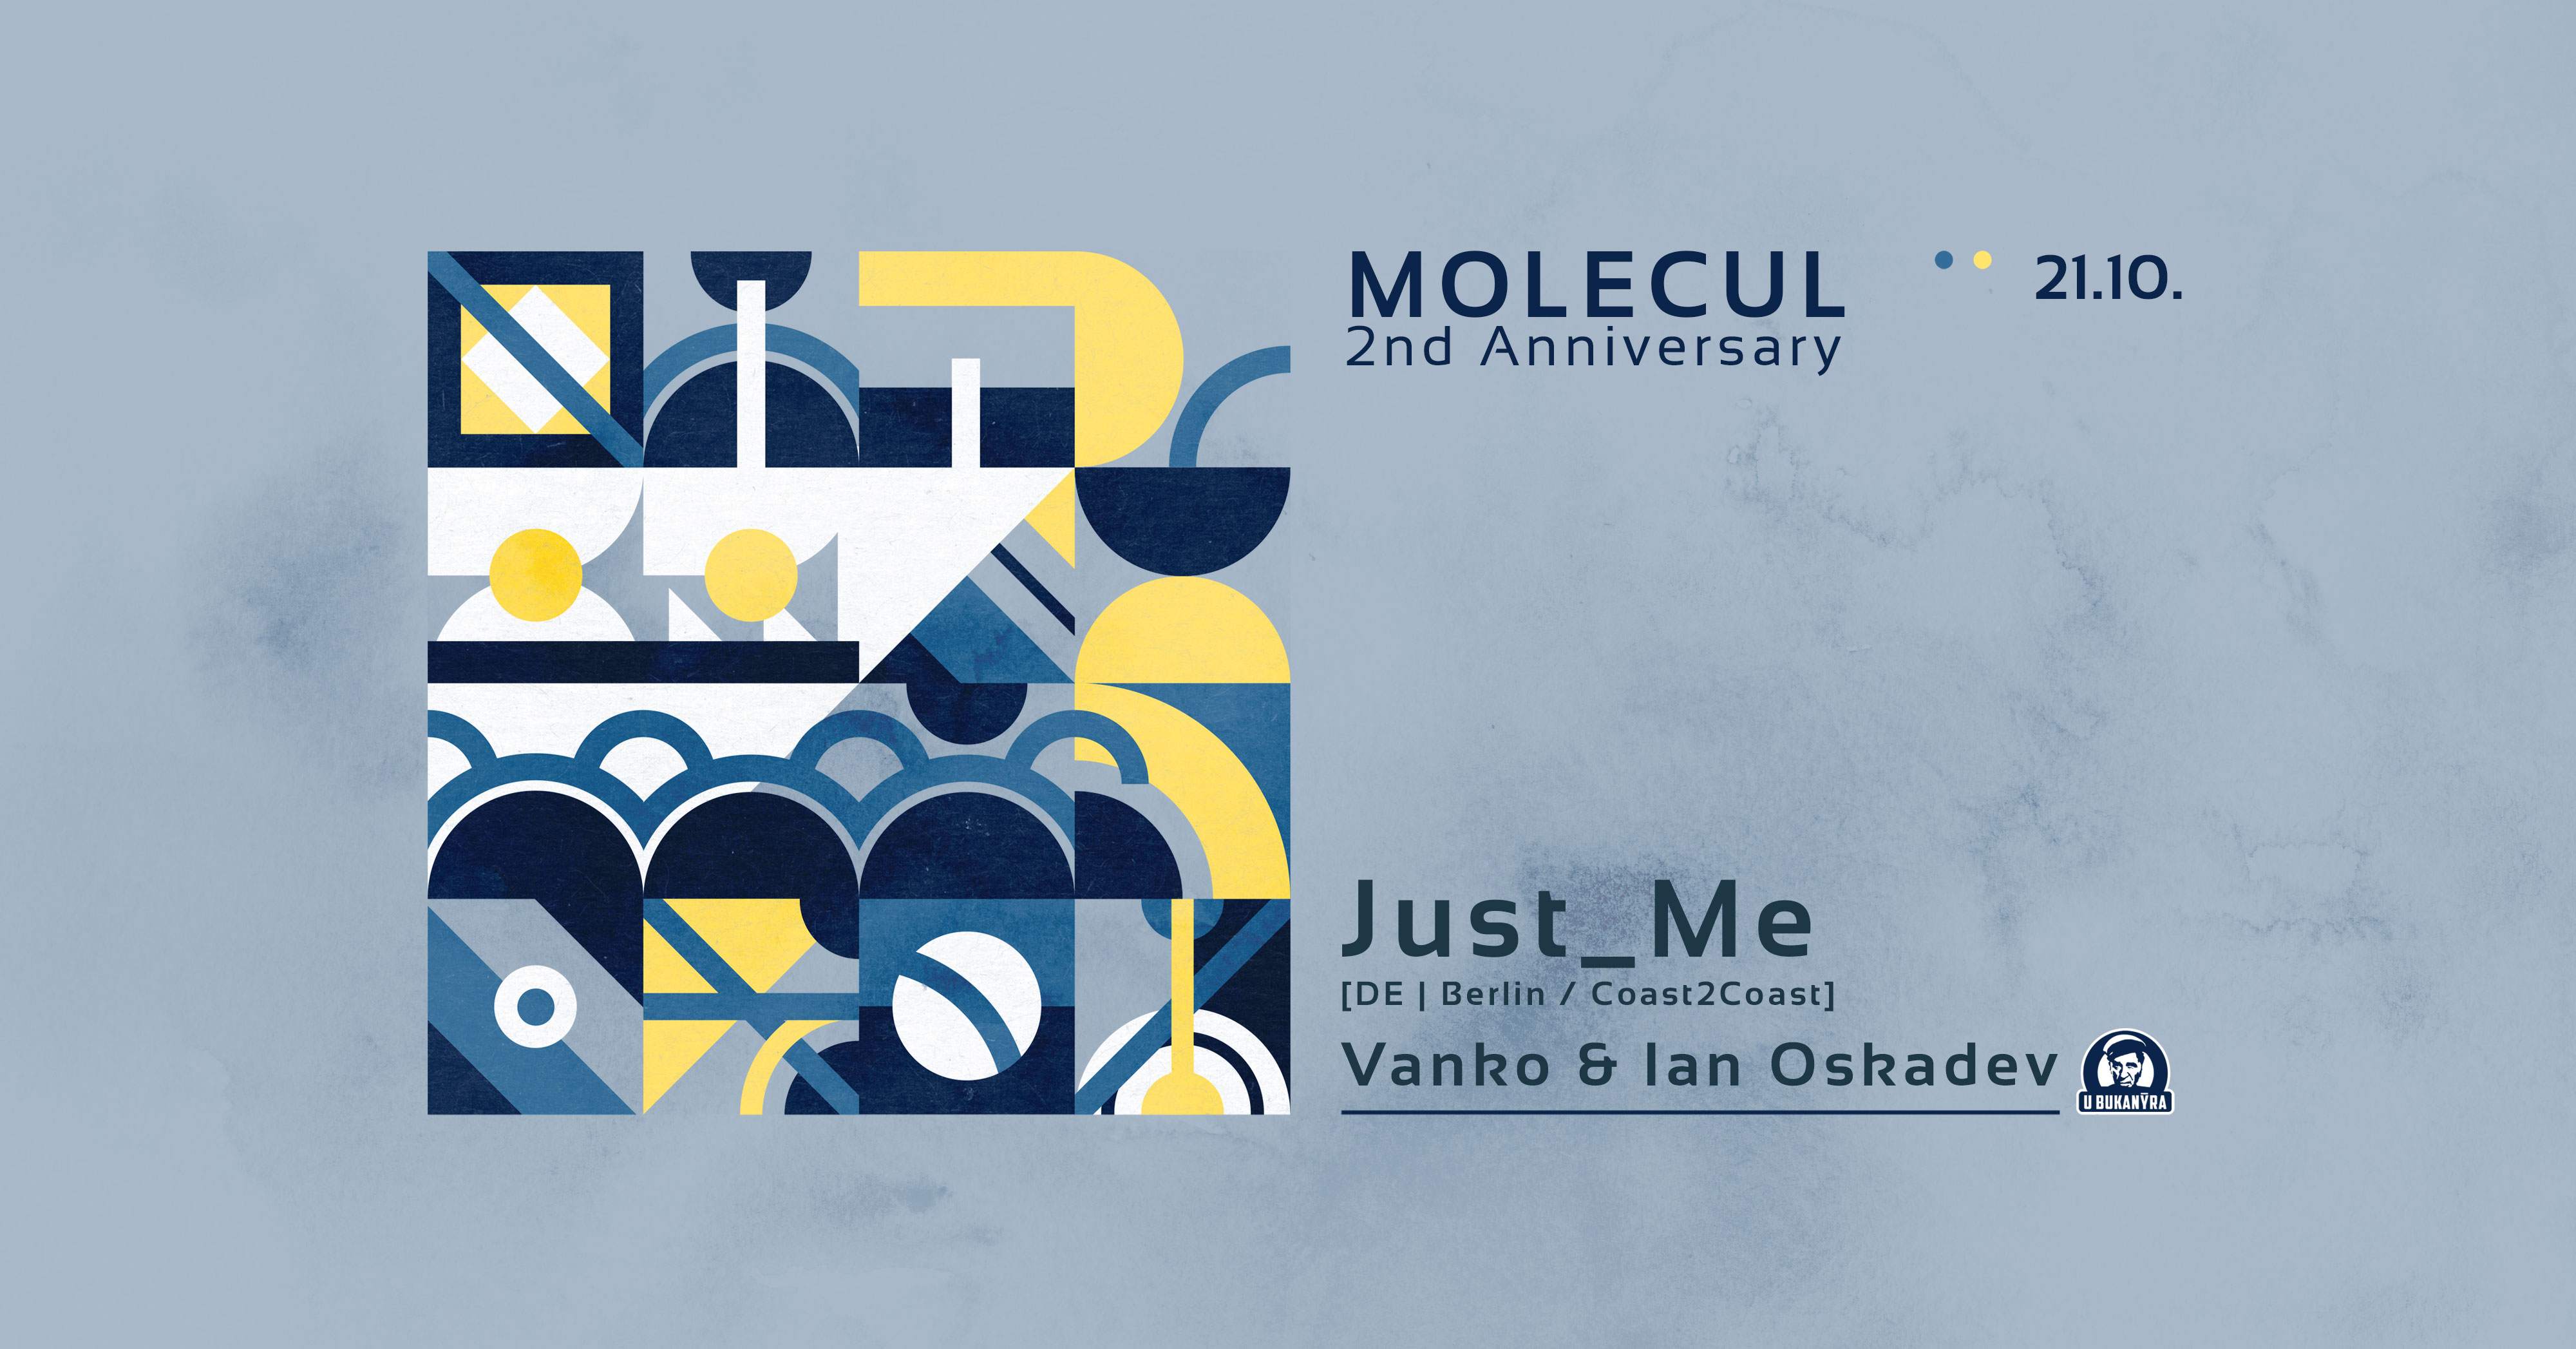 MOLECUL 2nd Anniversary - djs Just_Me /DE, Berlin, coast2coast/, Vanko, Ian Oskadev - フライヤー表